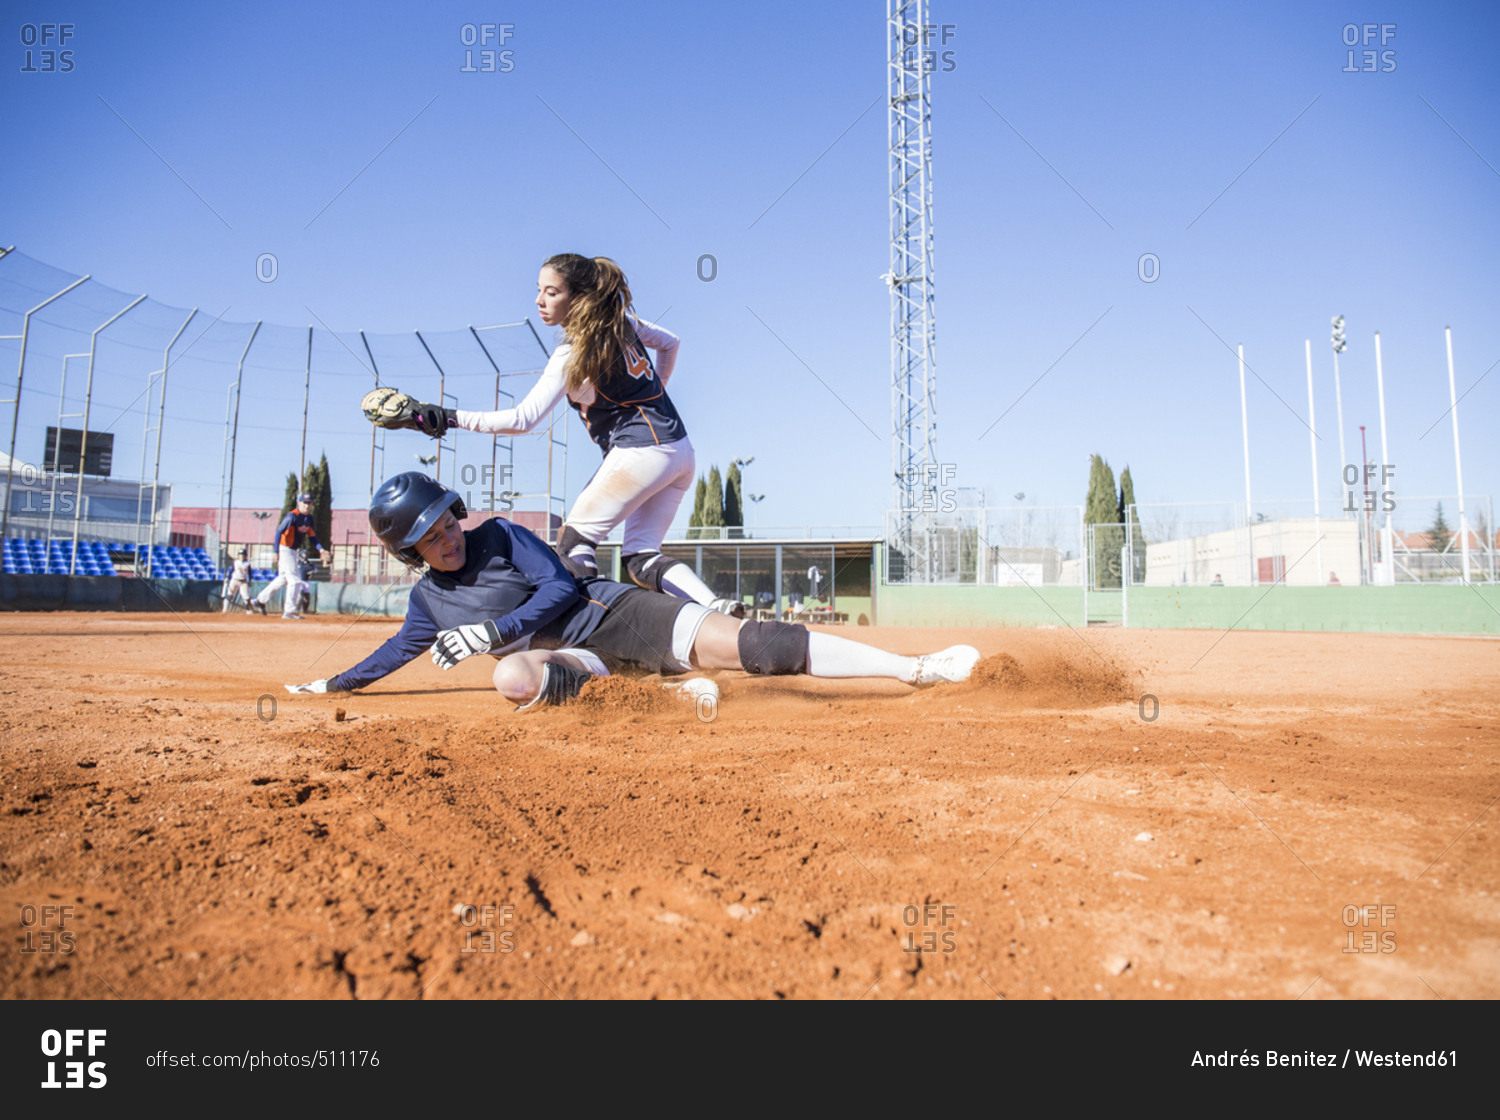 Baseball player sliding to the base during a baseball game